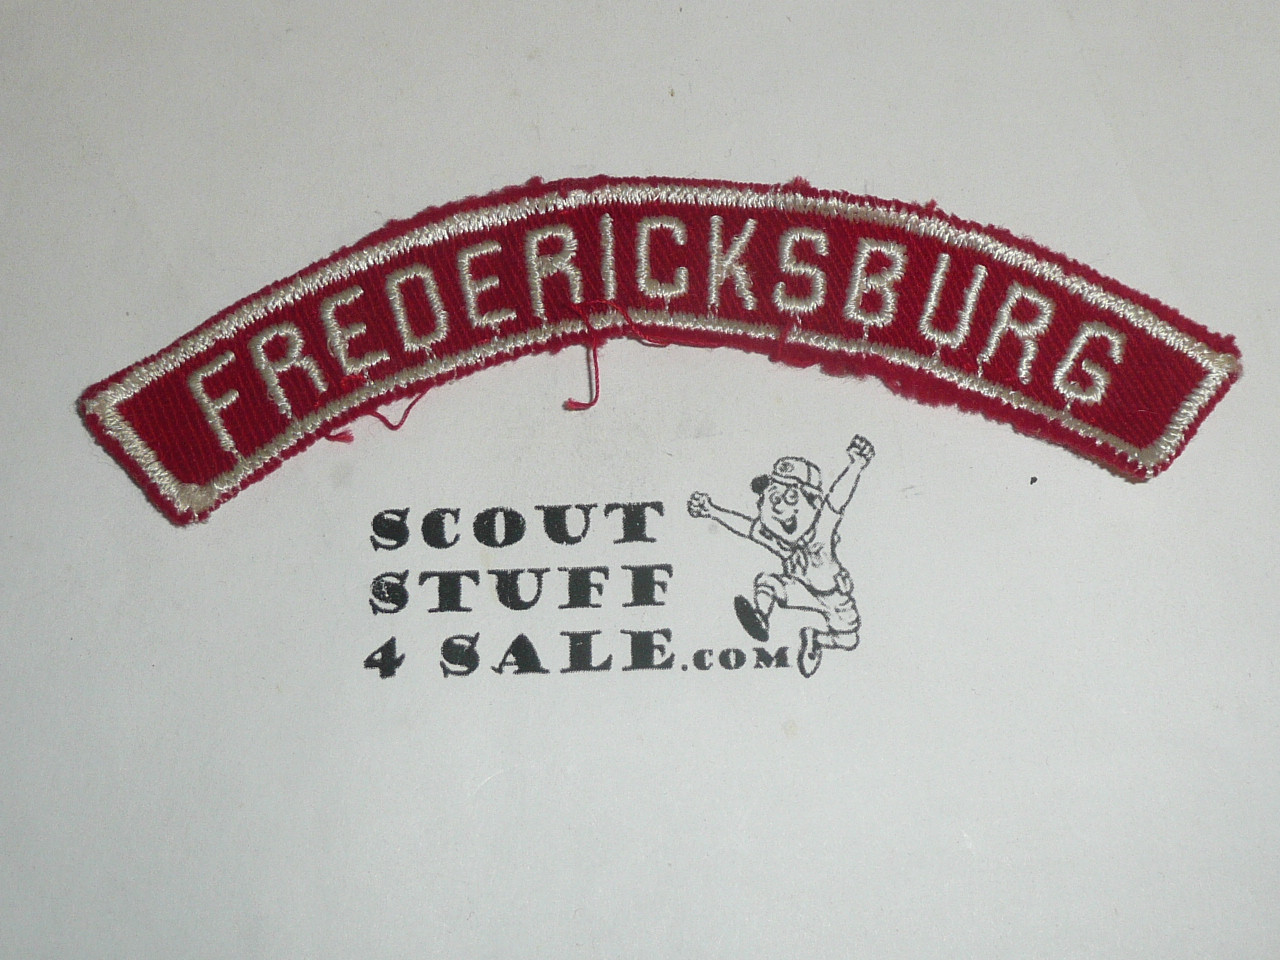 FREDERICKSBURG Red and White Community Strip, used